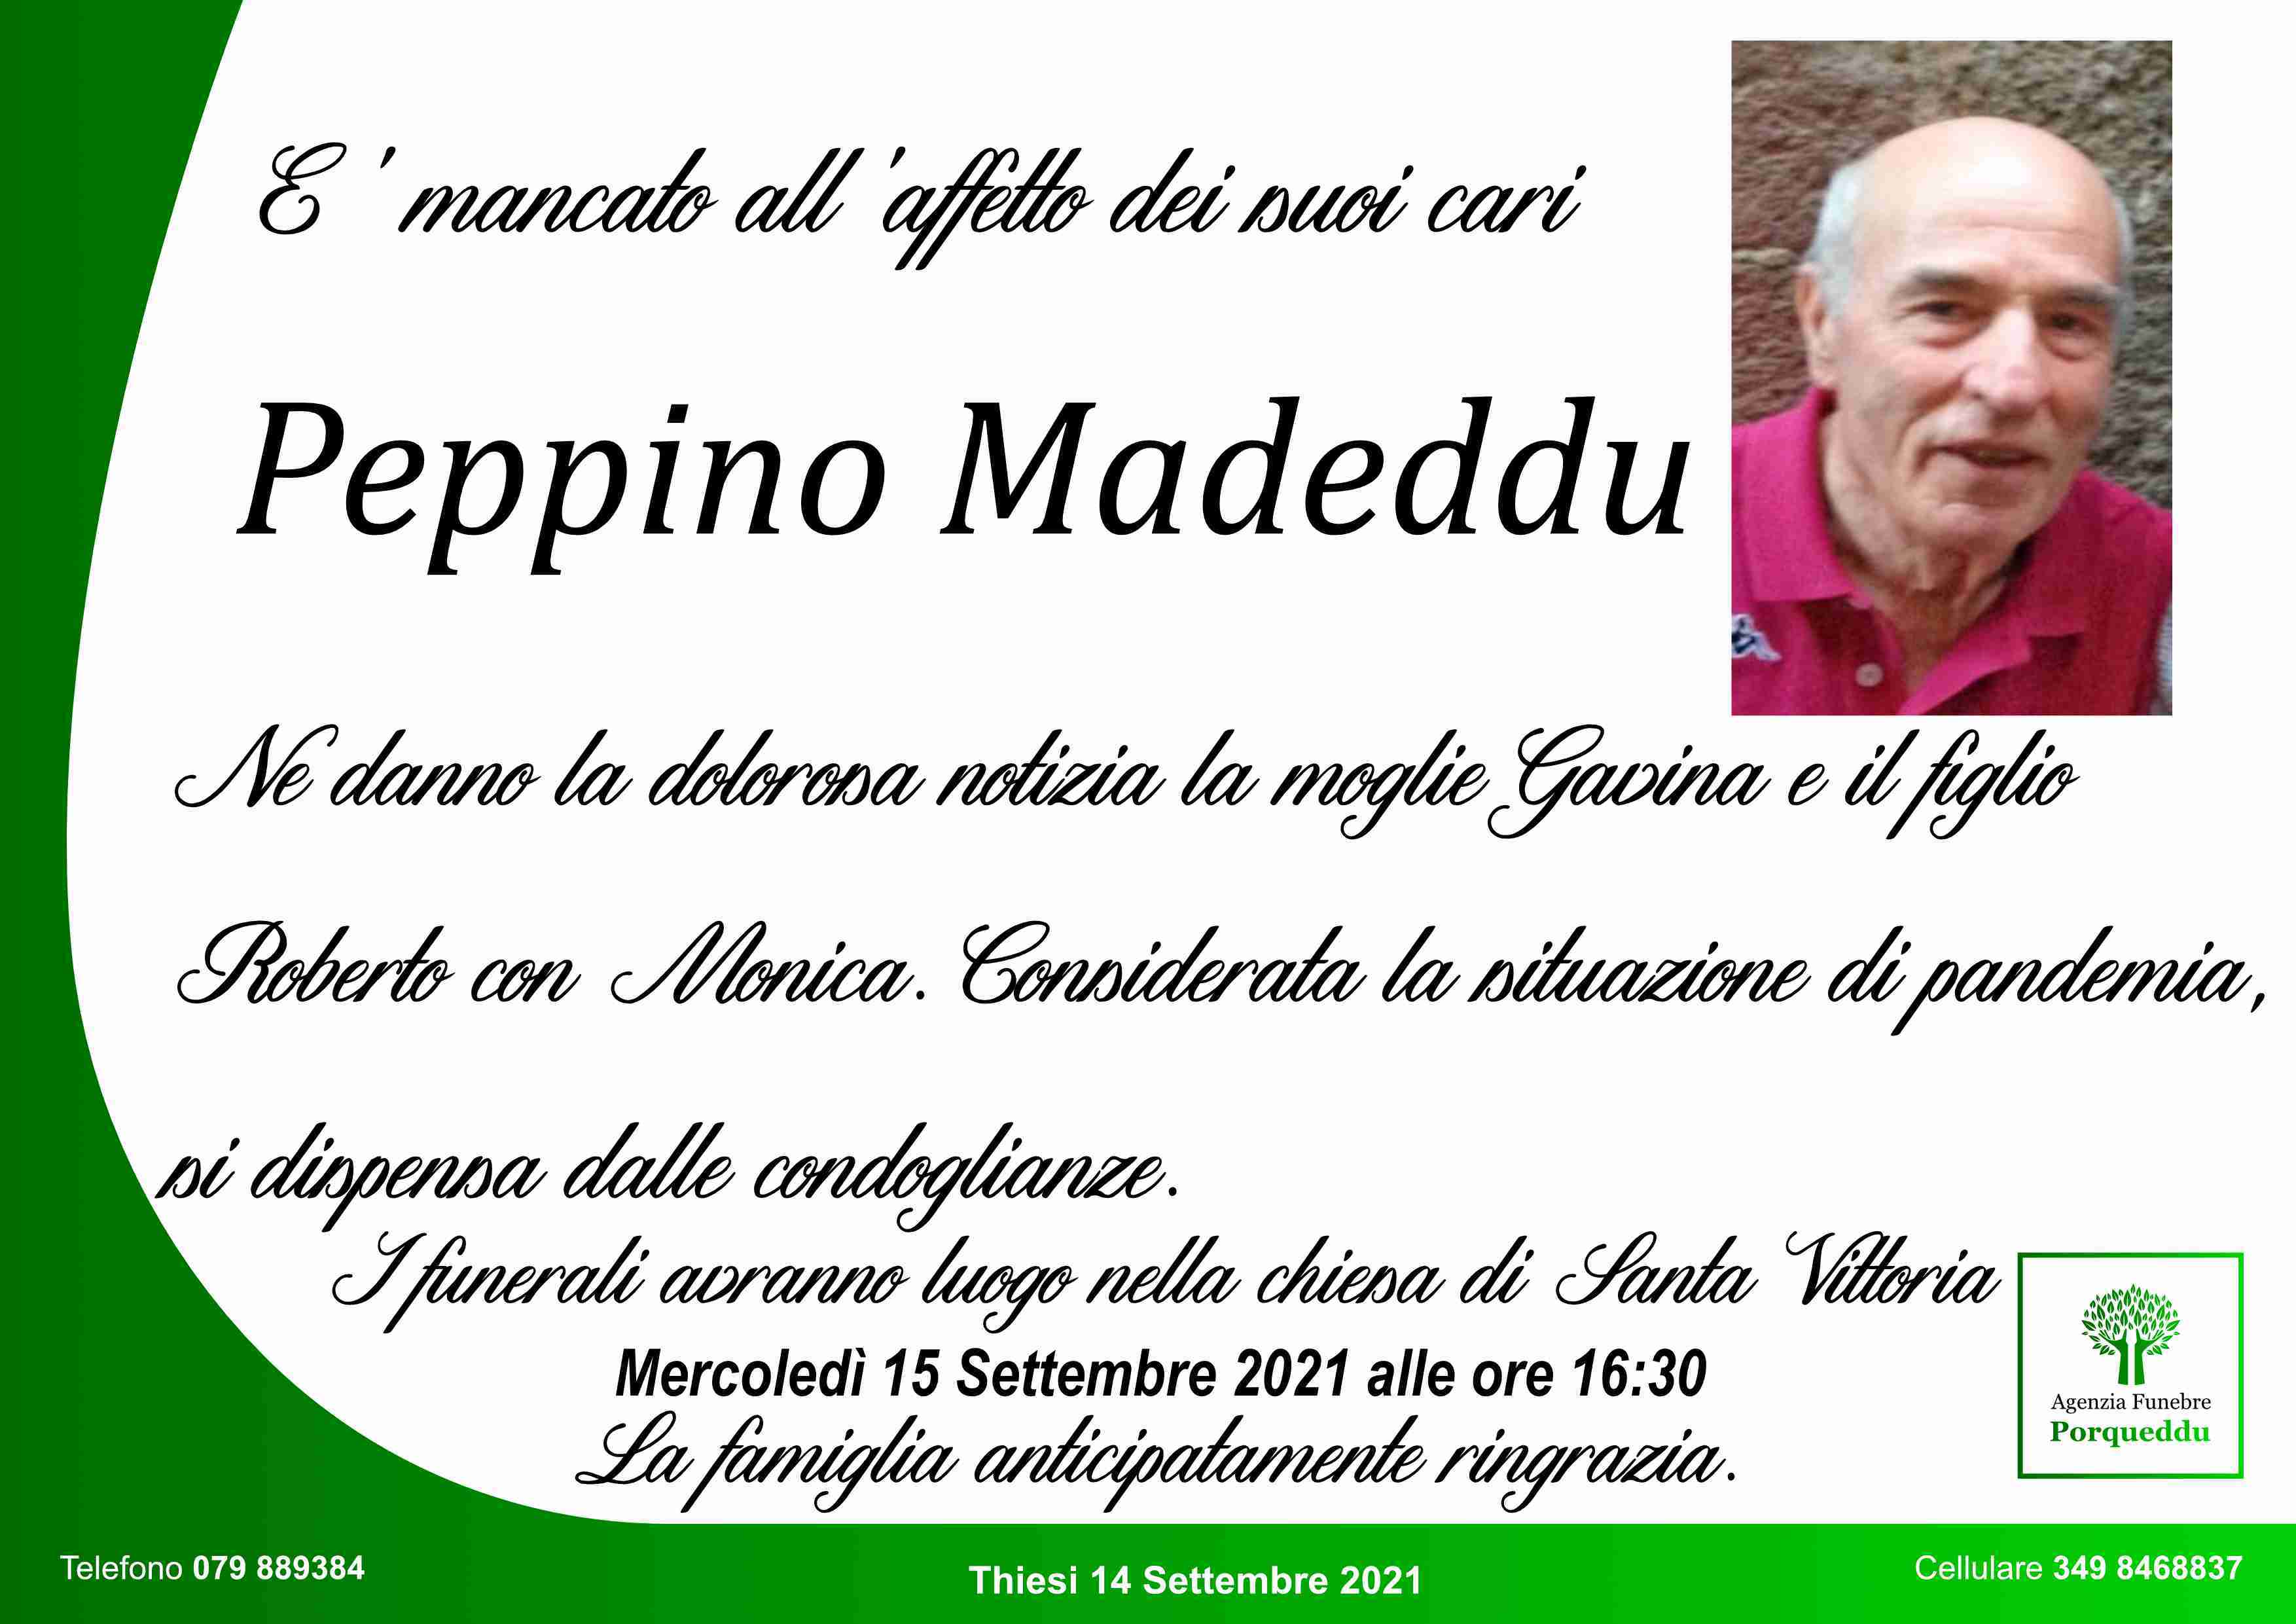 Peppino Madeddu